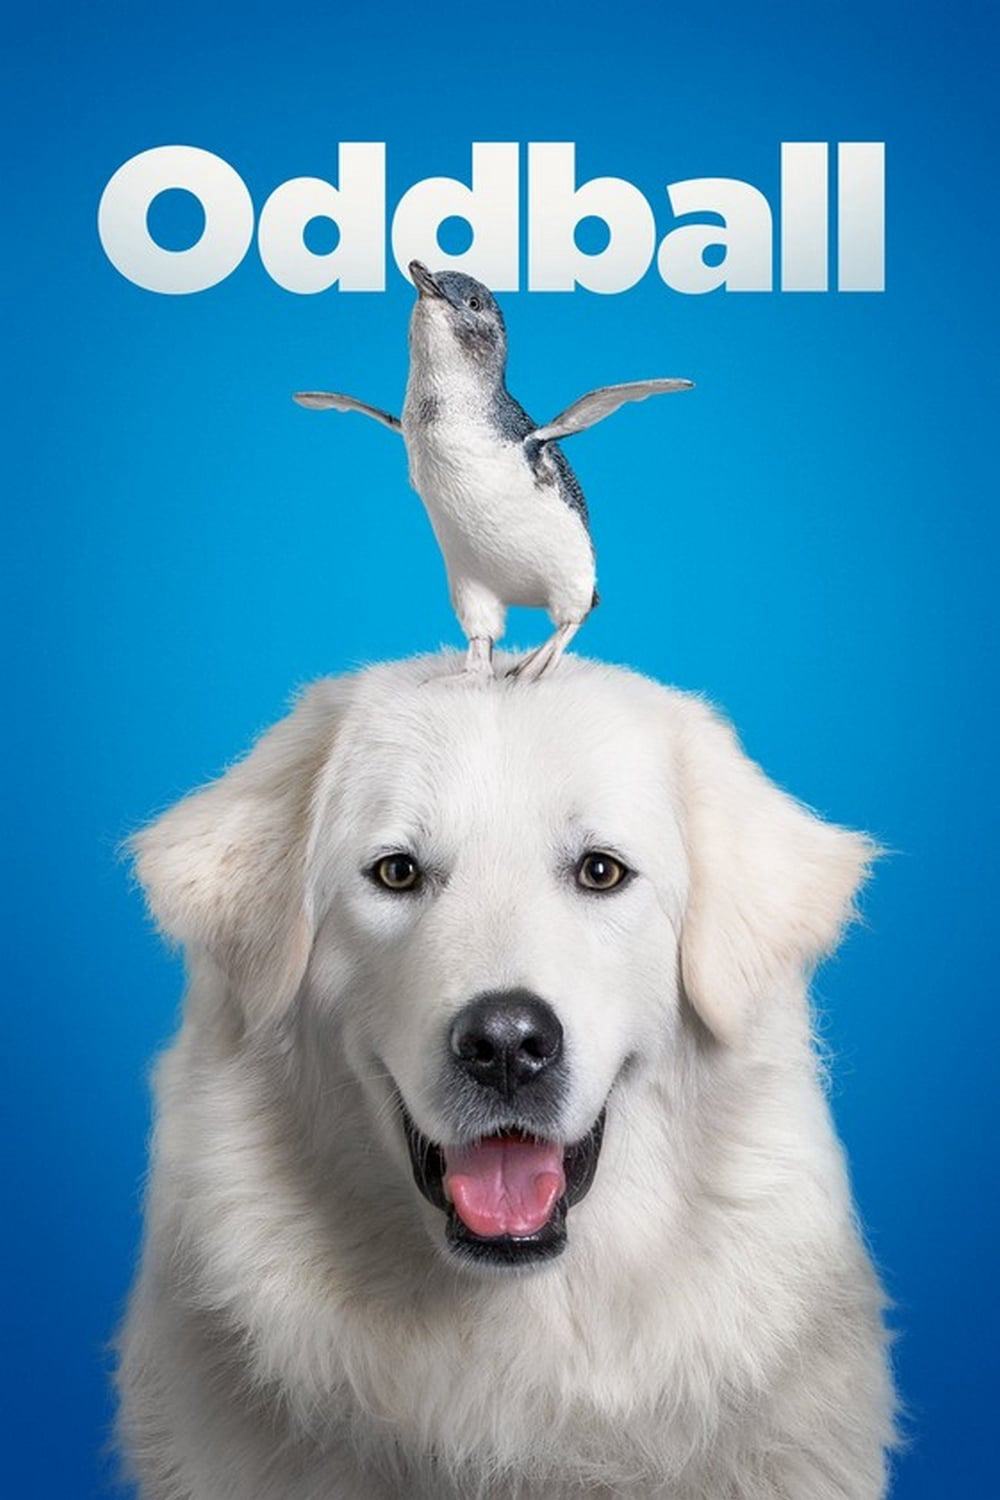 Poster Phim Chú Chó OddBall (Oddball)